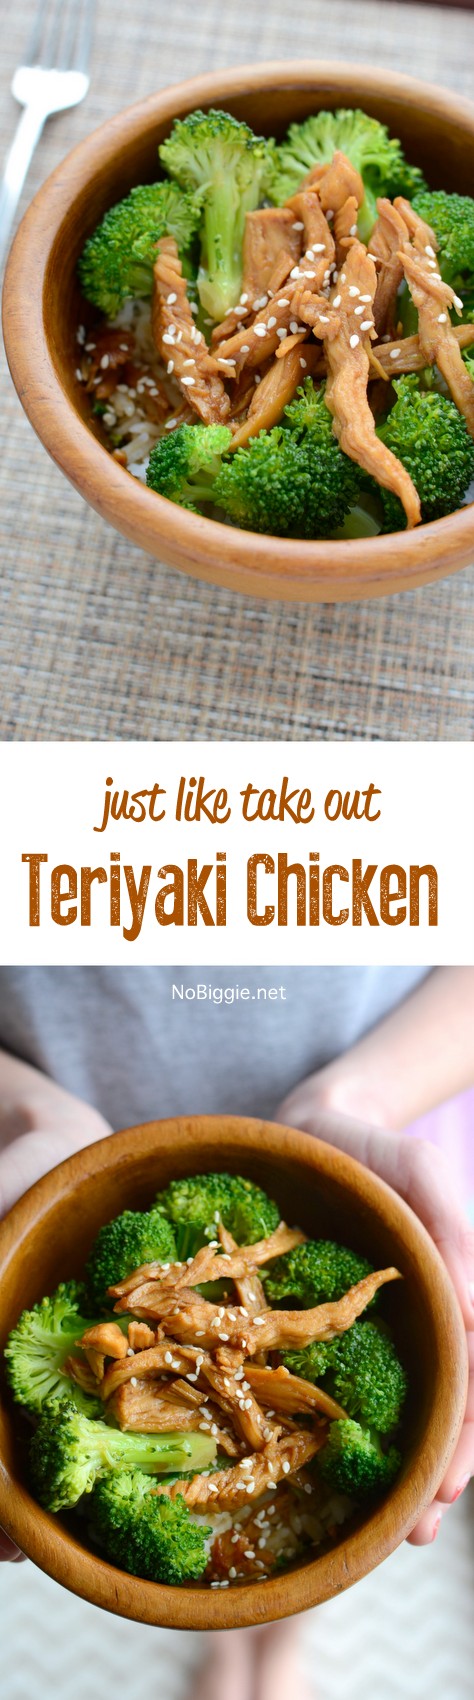 http://www.nobiggie.net/wp-content/uploads/2016/05/Teriyaki-Chicken-So-good-it-tastes-just-like-take-out.jpg